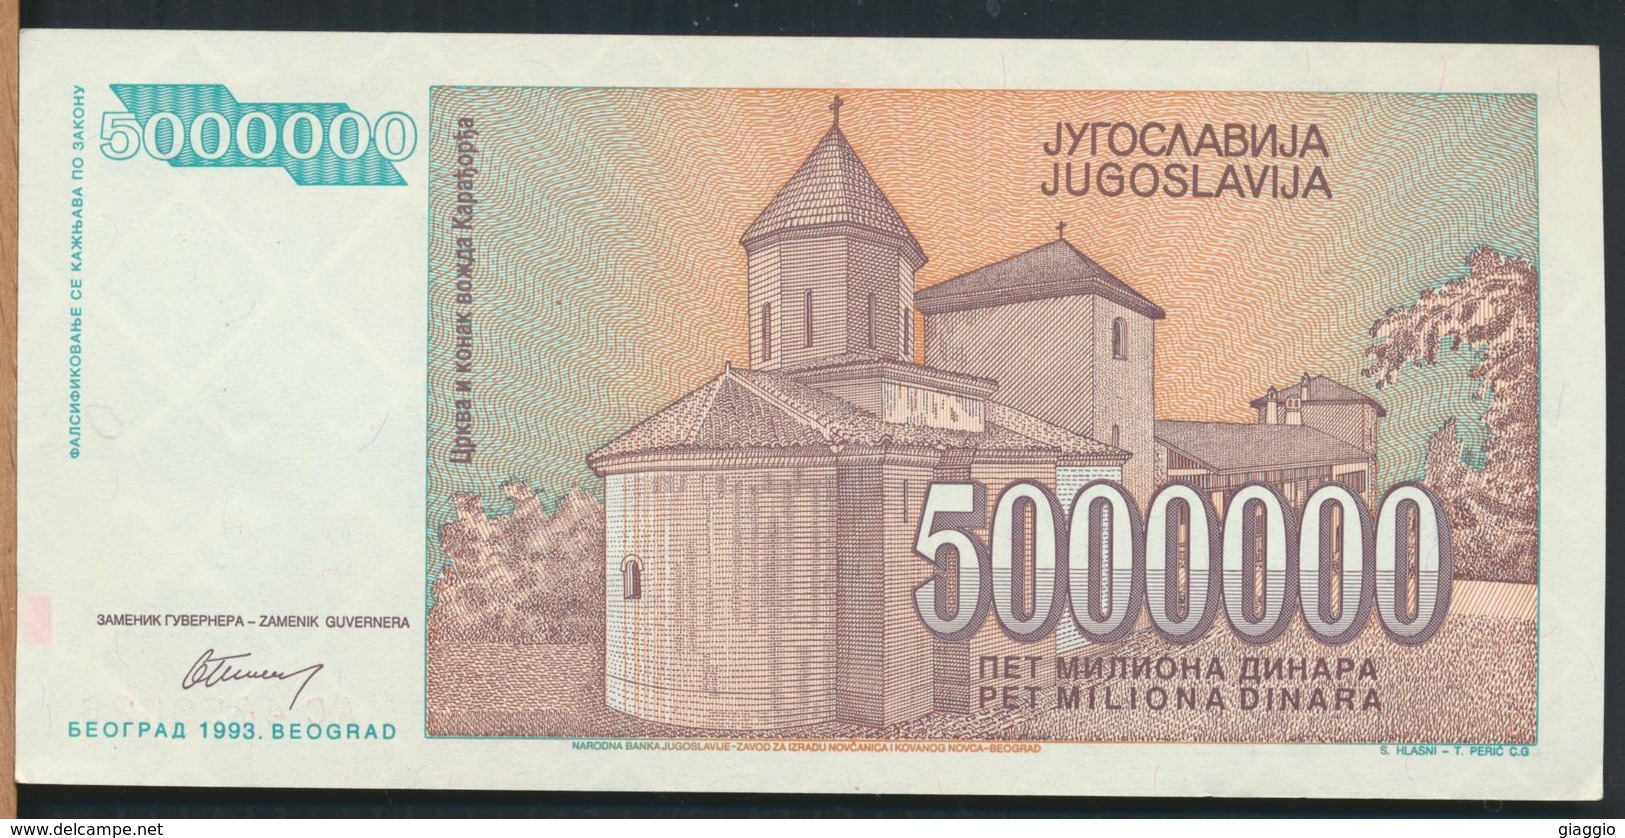 °°° JUGOSLAVIA 5000000 DINARA 1993 UNC °°° - Jugoslavia